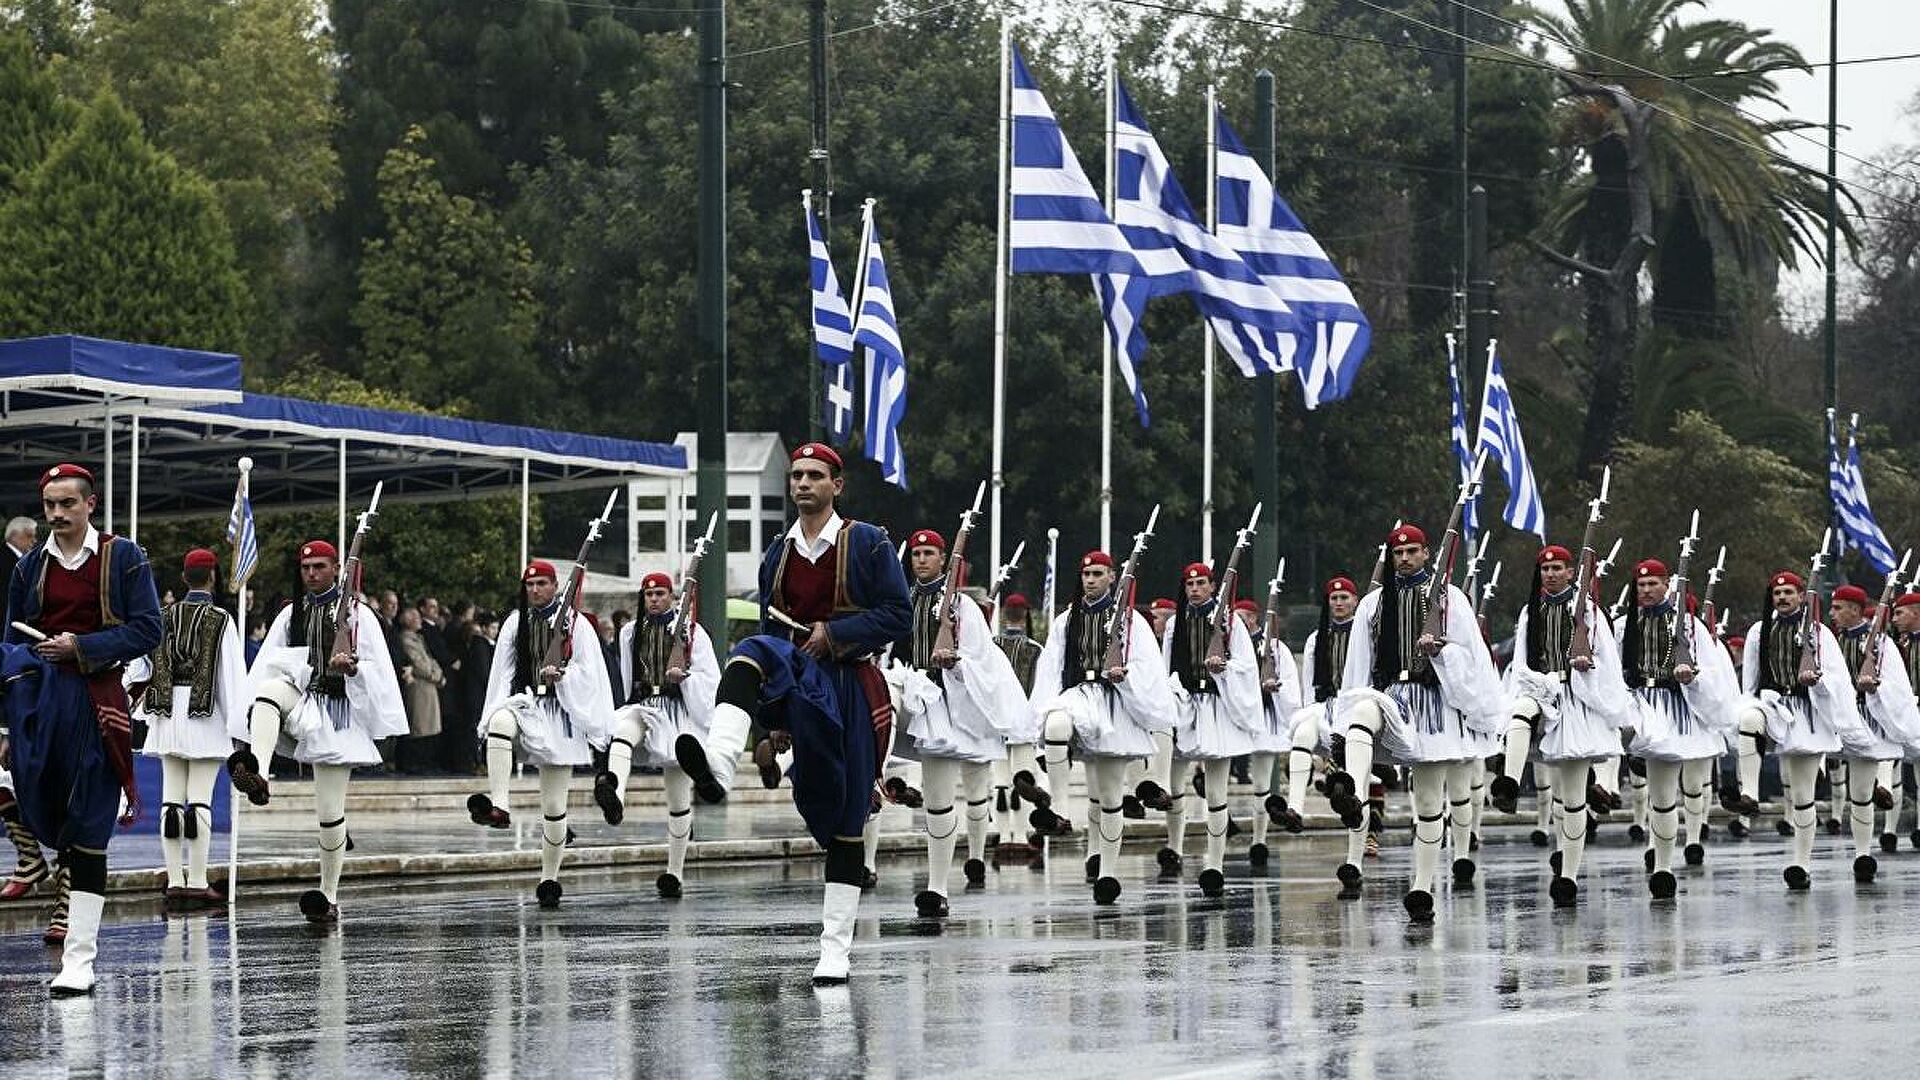 Greece celebrates its bicentennial amid pandemic lockdown